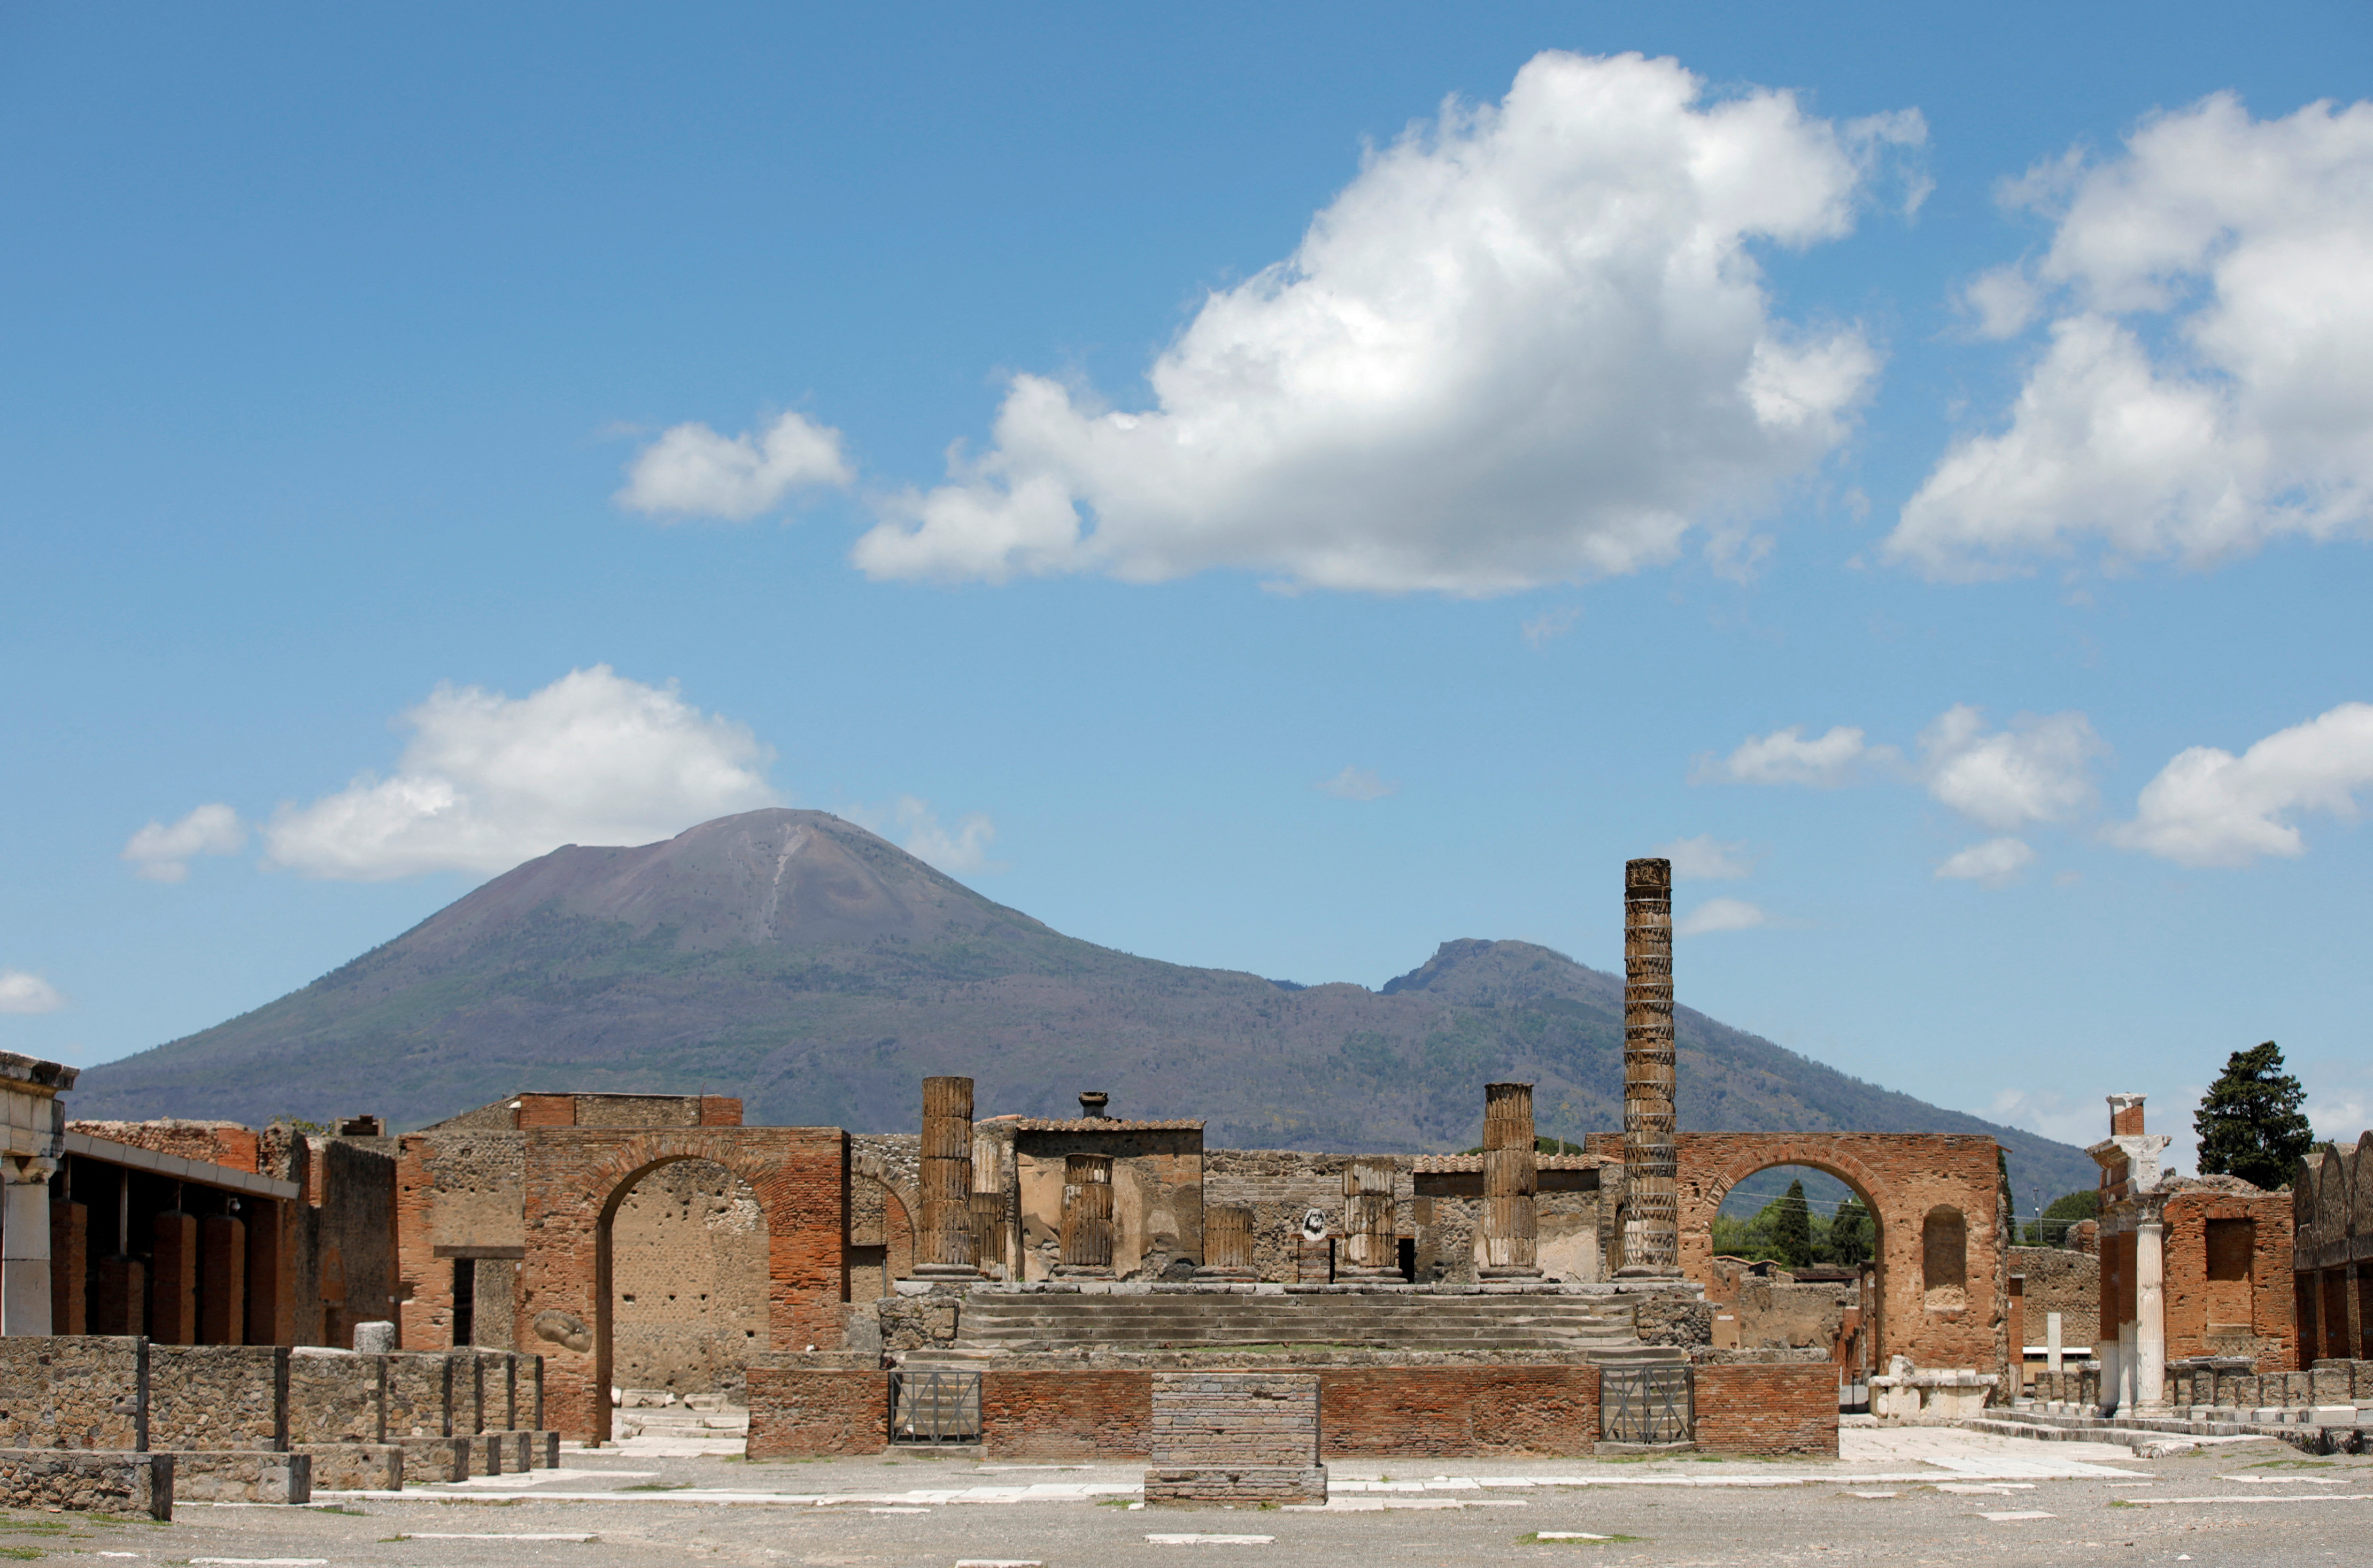 Coronavirus disease (COVID-19) outbreak in Pompeii